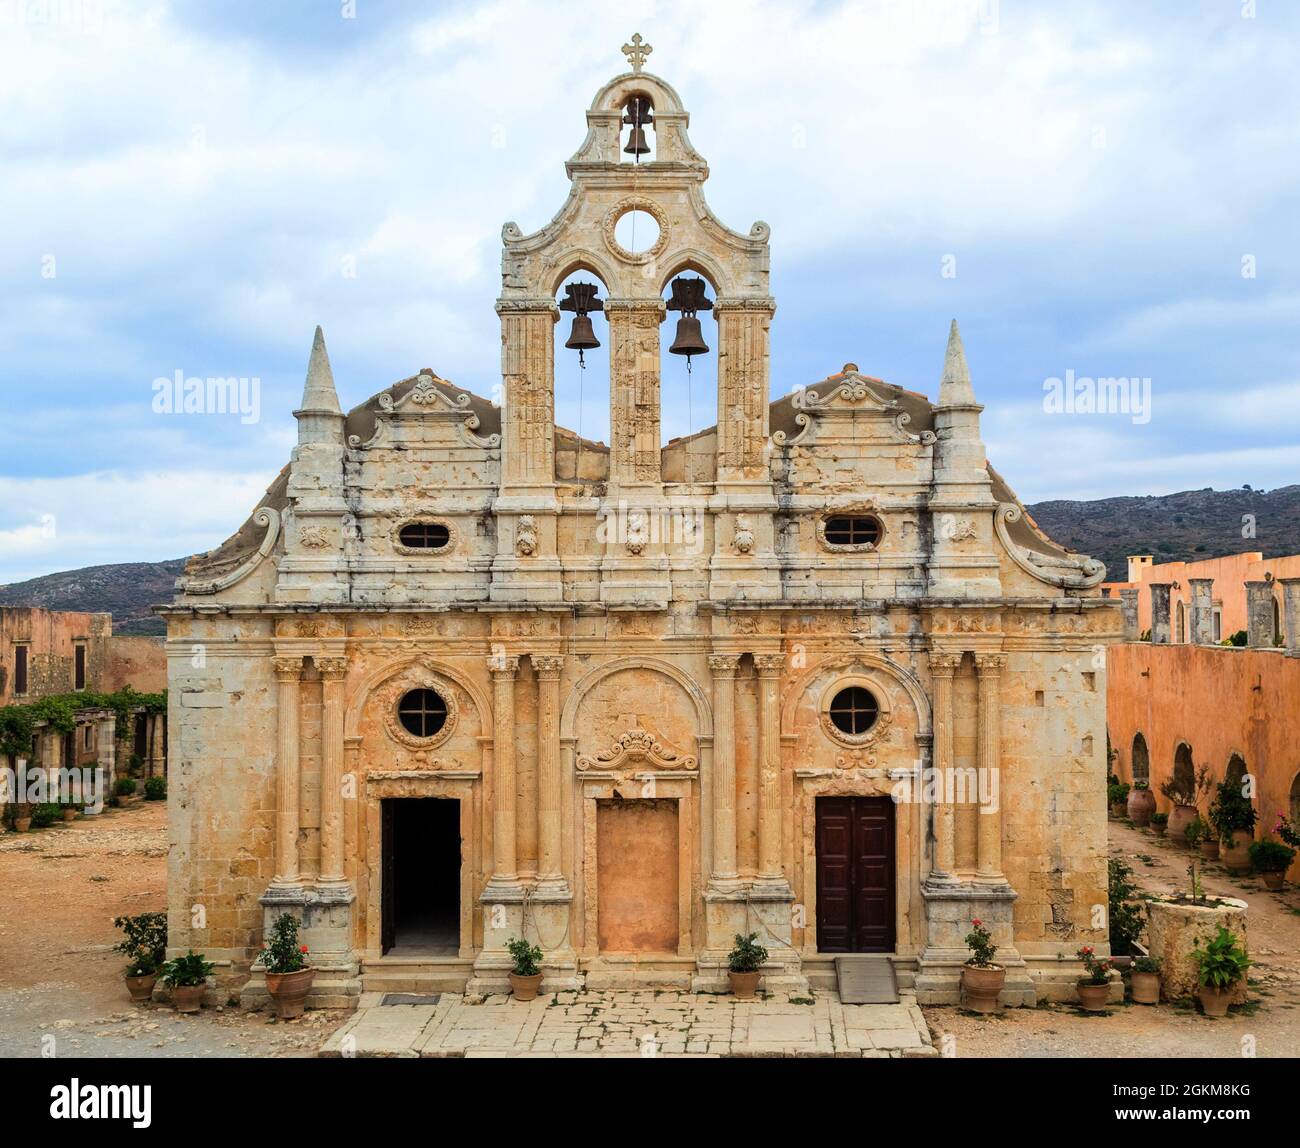 Arkadia Kloster Vorderansicht facadde in Kreta, Griechenland Stockfoto